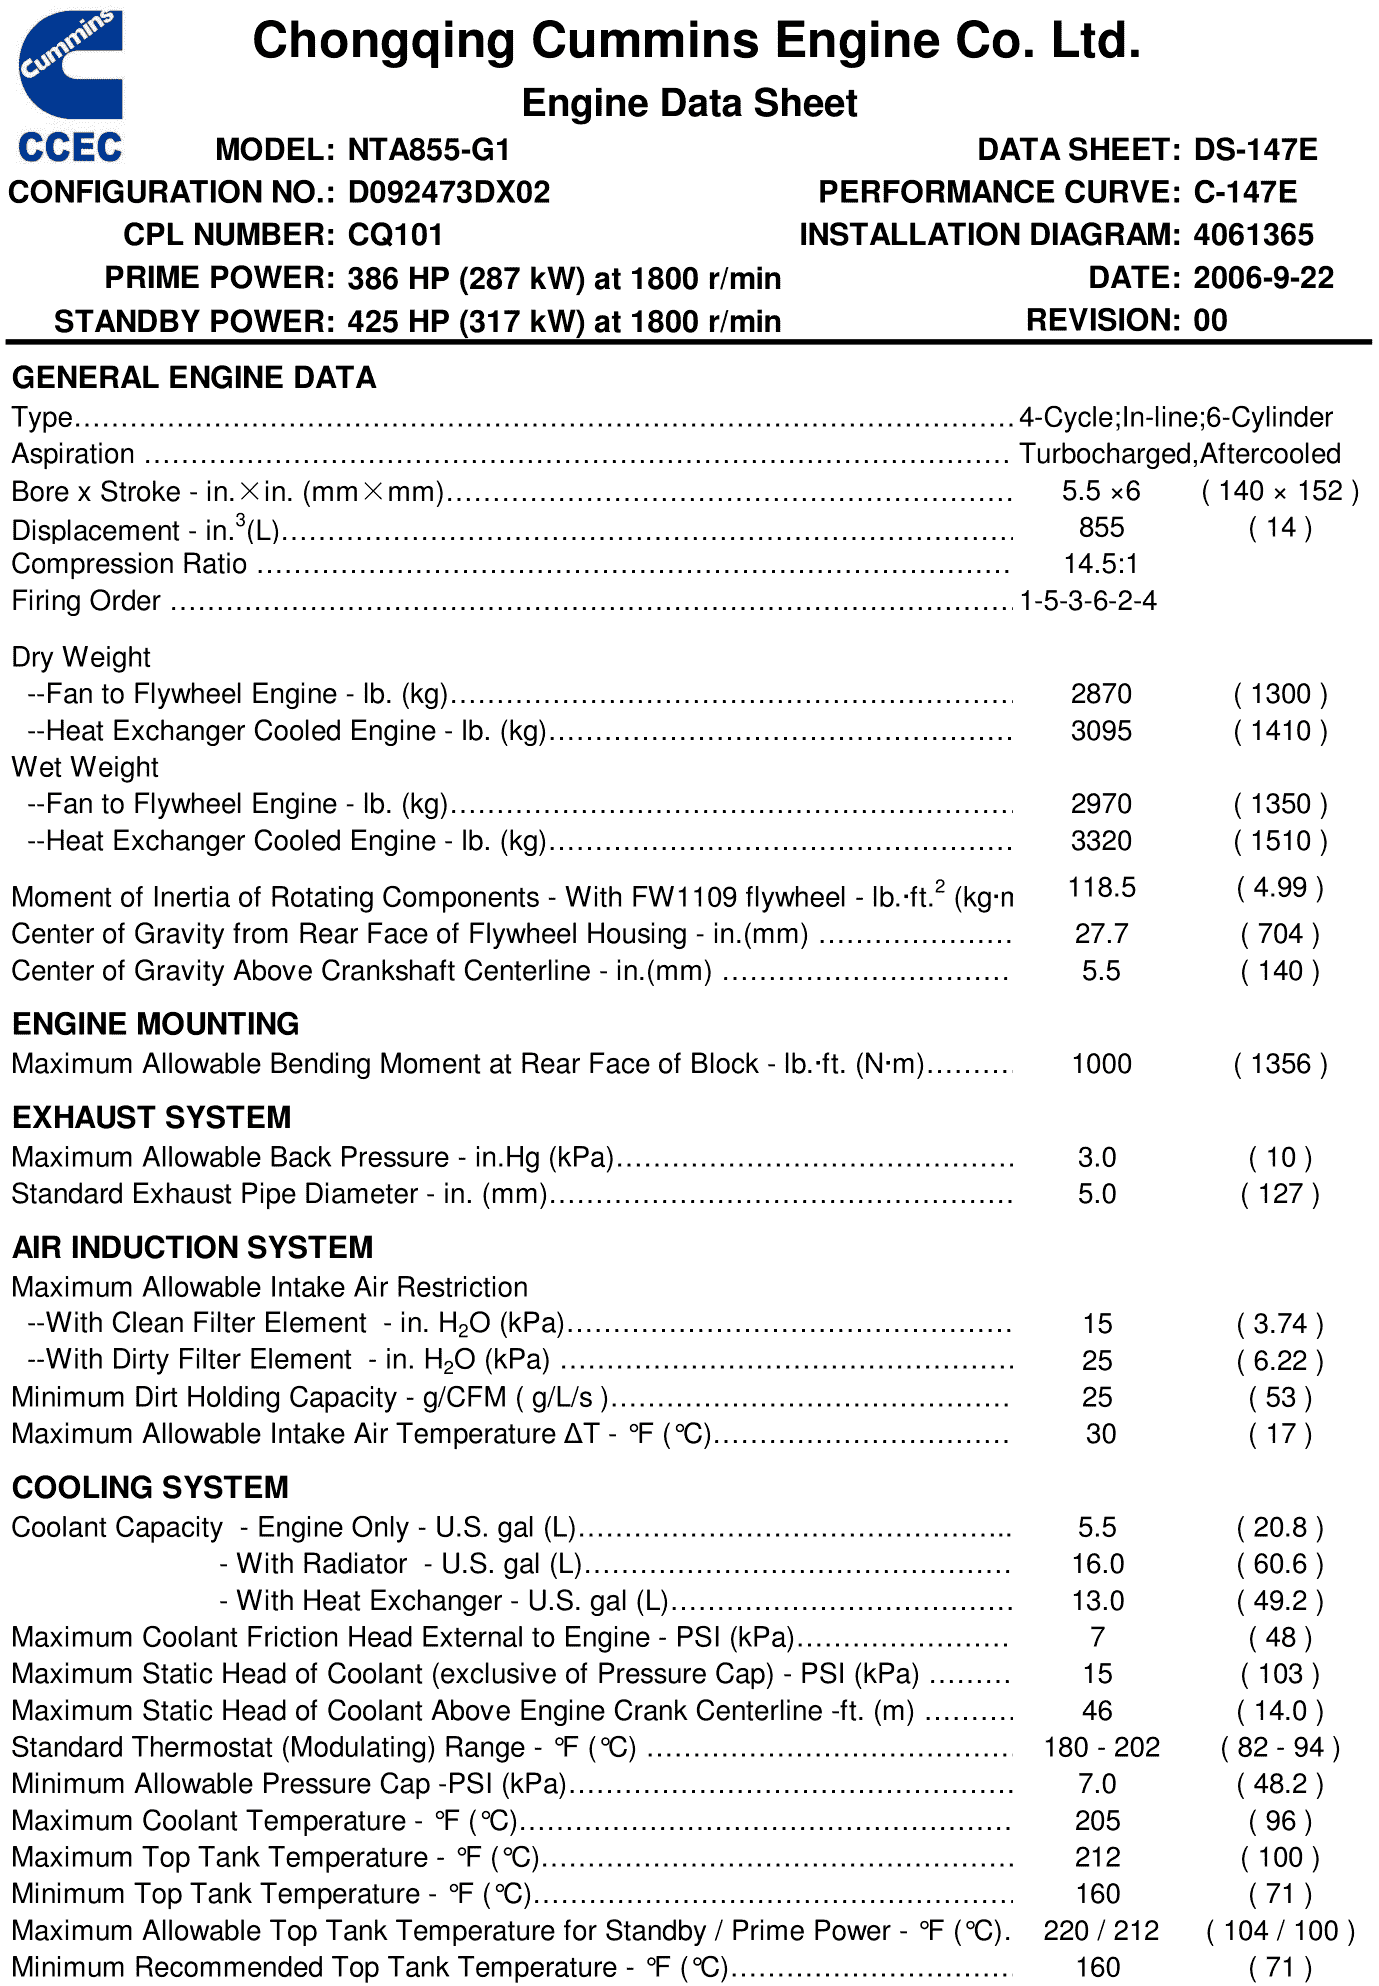 Cummins NTA855-G1 60Hz datasheet